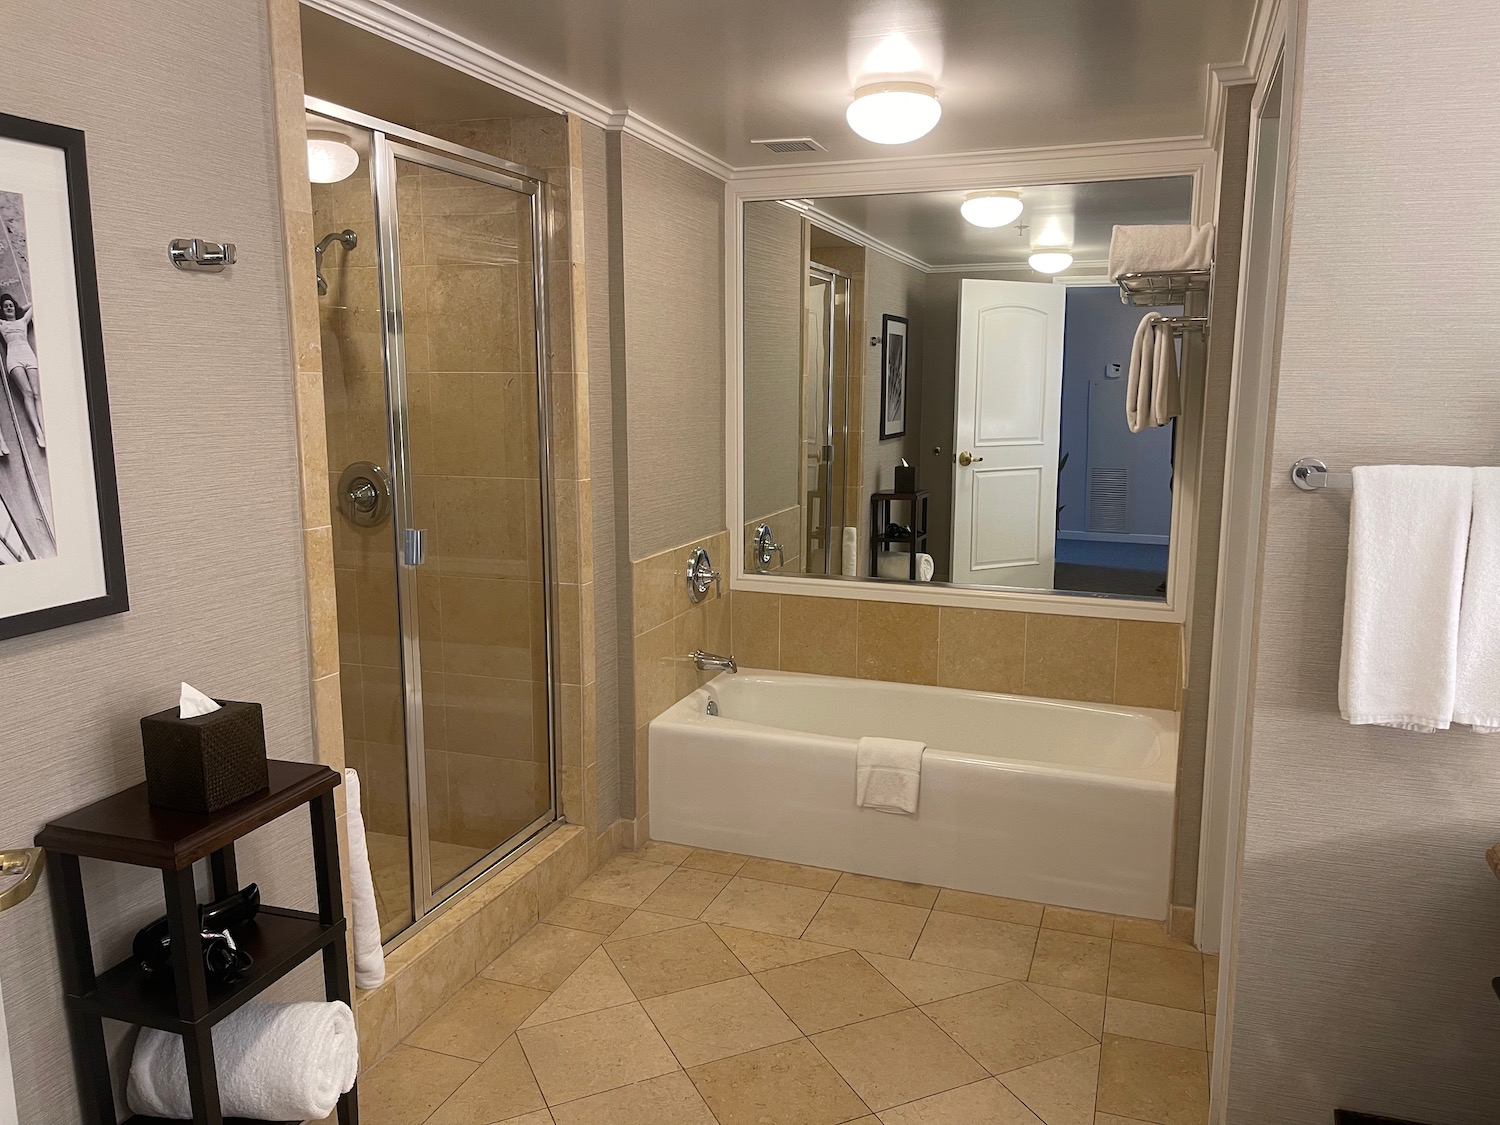 a bathroom with a shower and bathtub